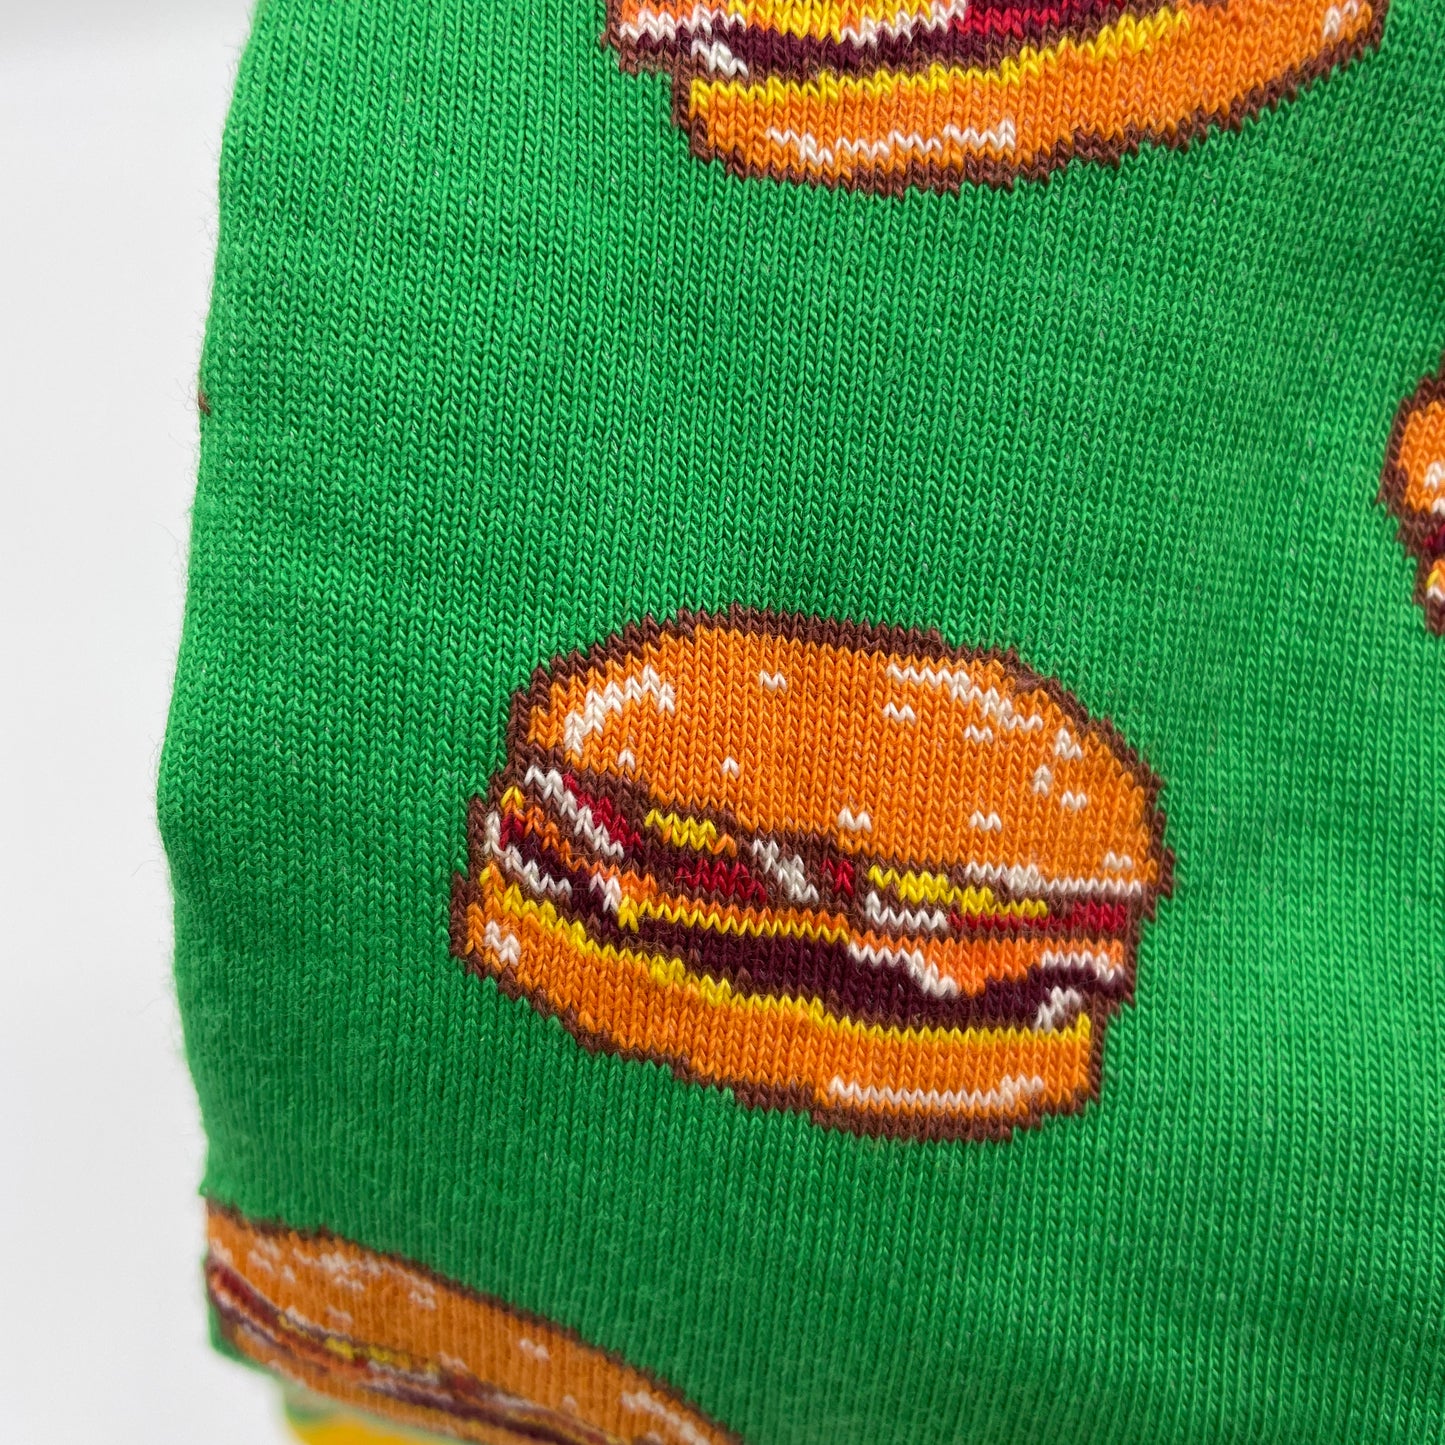 Green Cheeseburger Adult Unisex Organic Cotton Socks